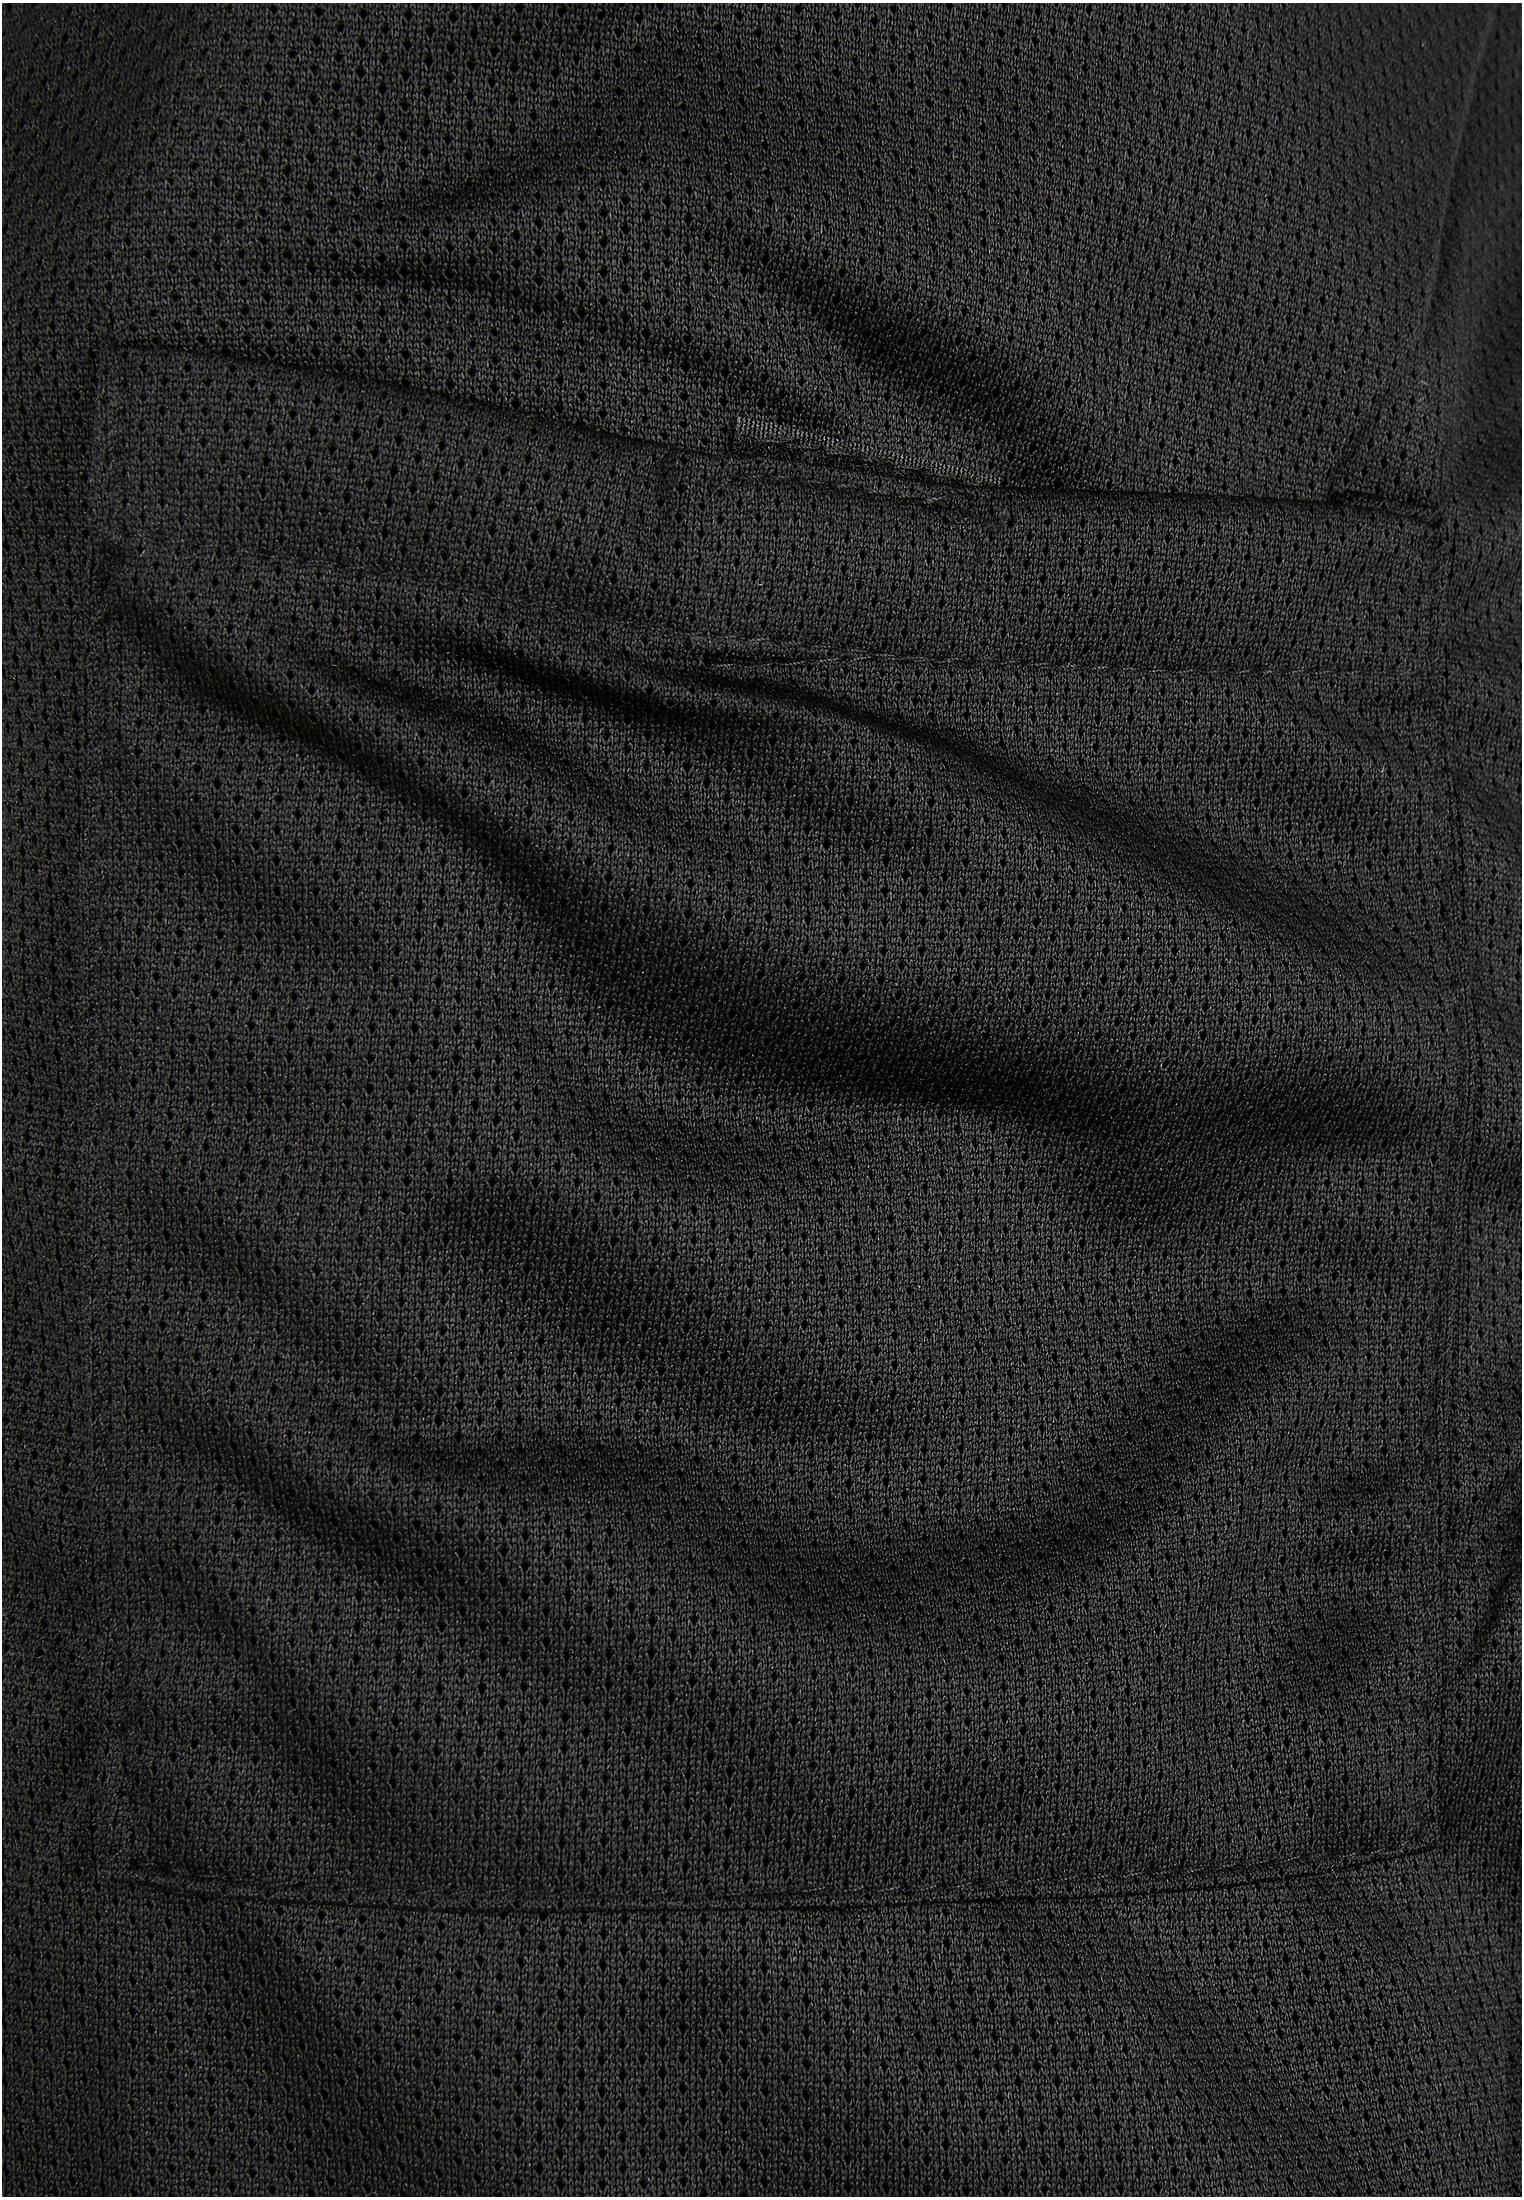 Pullover Teddyfleece Worker Jacket in Farbe olive